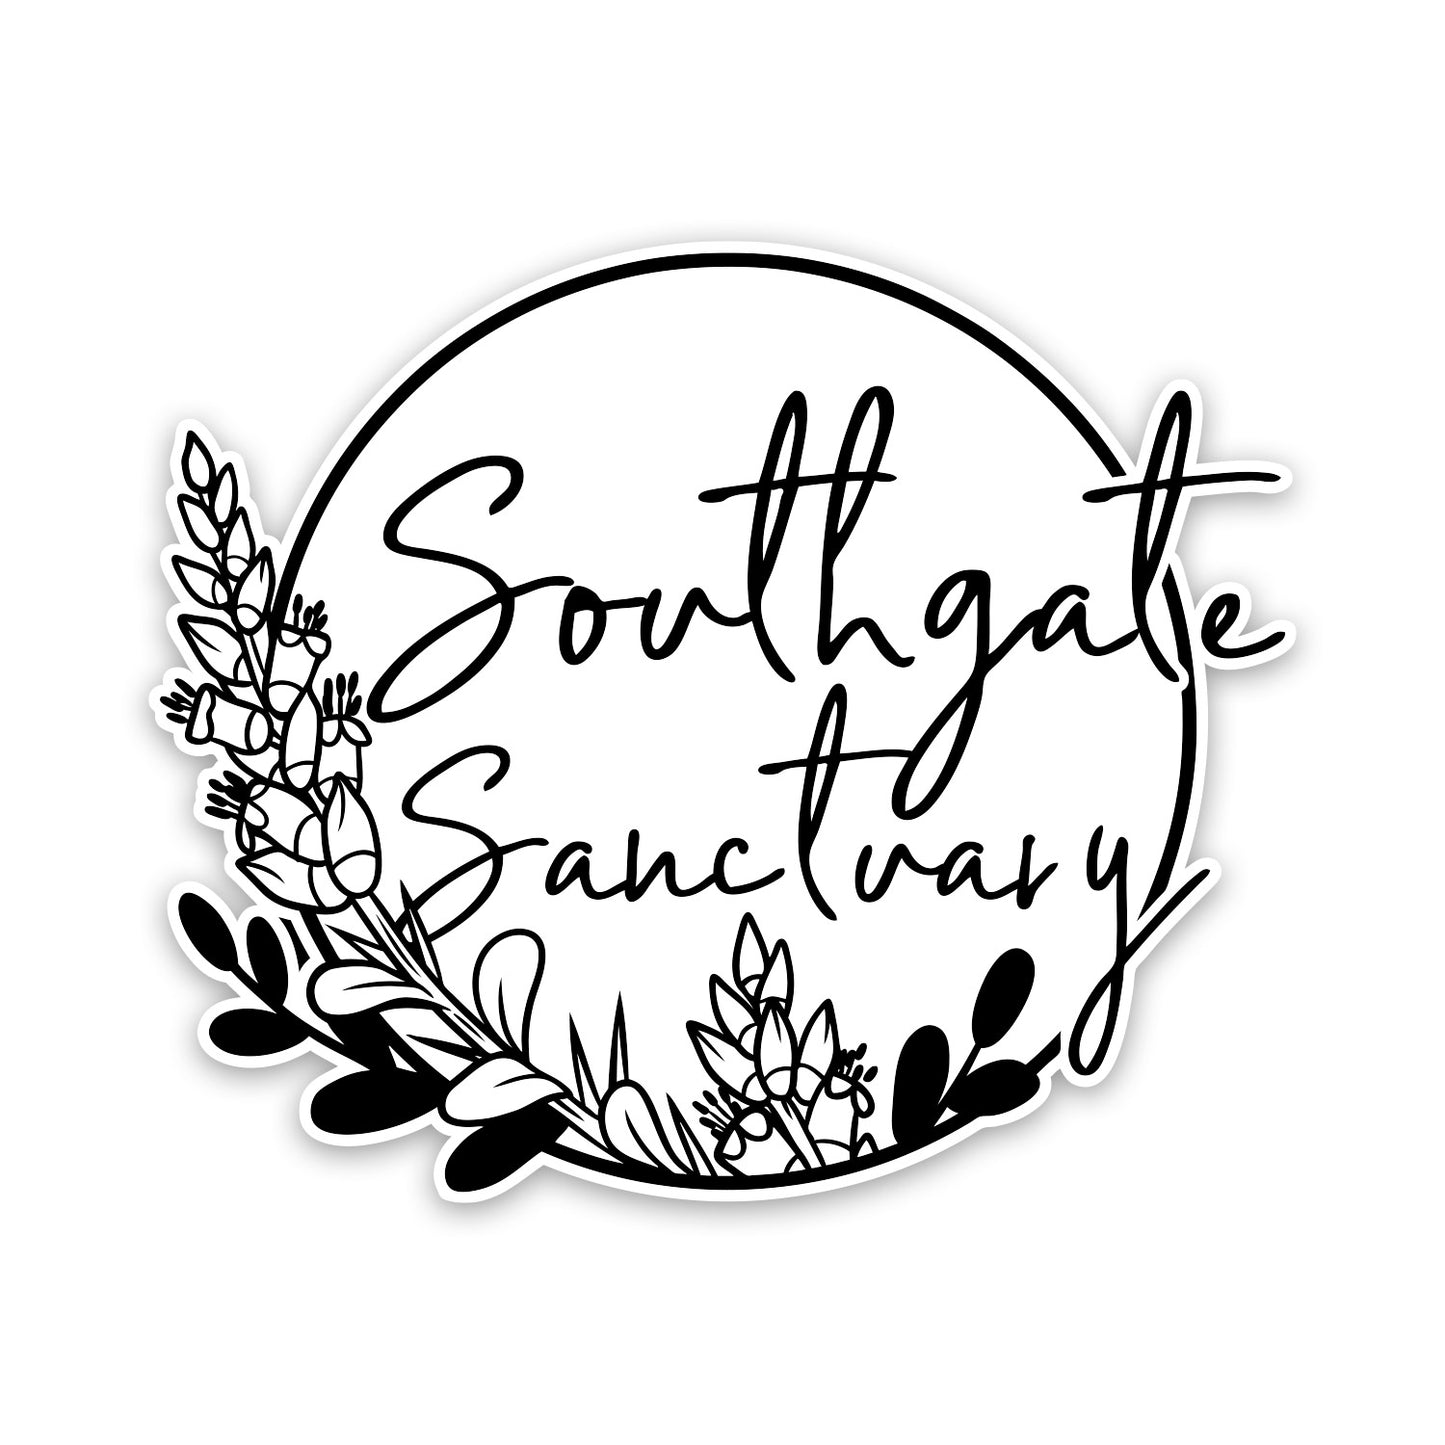 Southgate Sanctuary Sticker - FREE SHIPPING